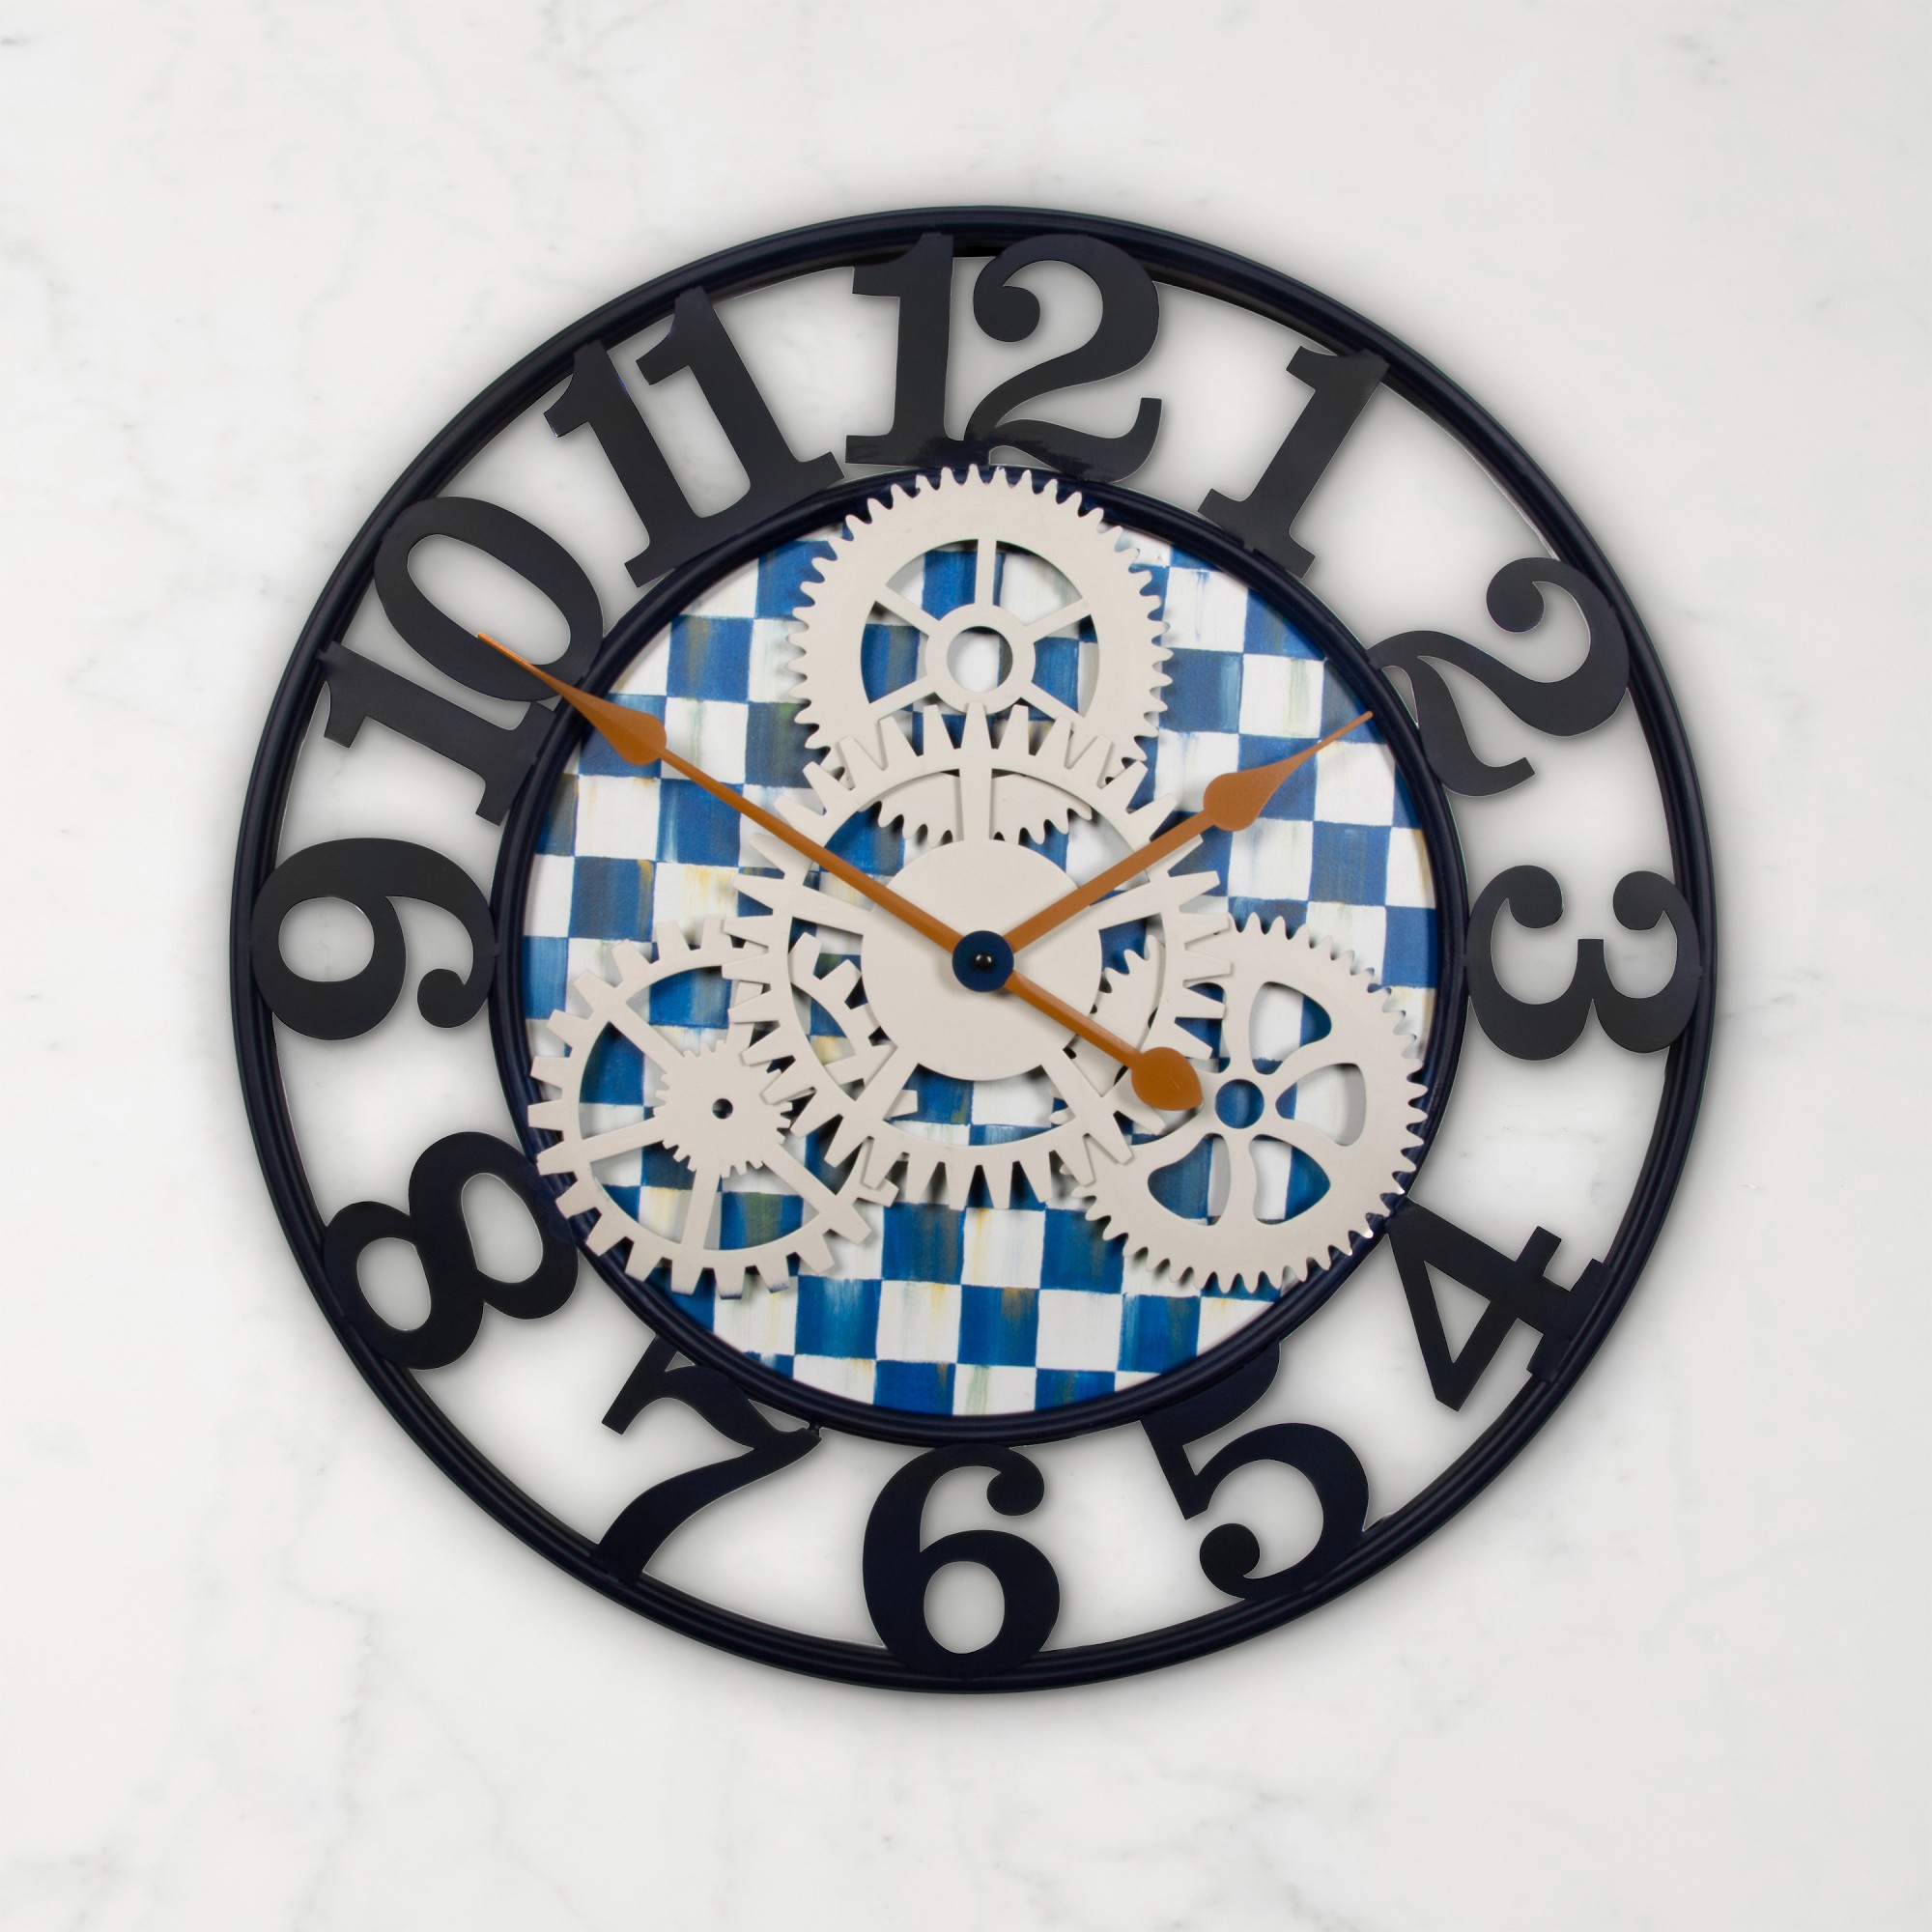 MacKenzie-Childs Royal Check Farmhouse Wall Clock